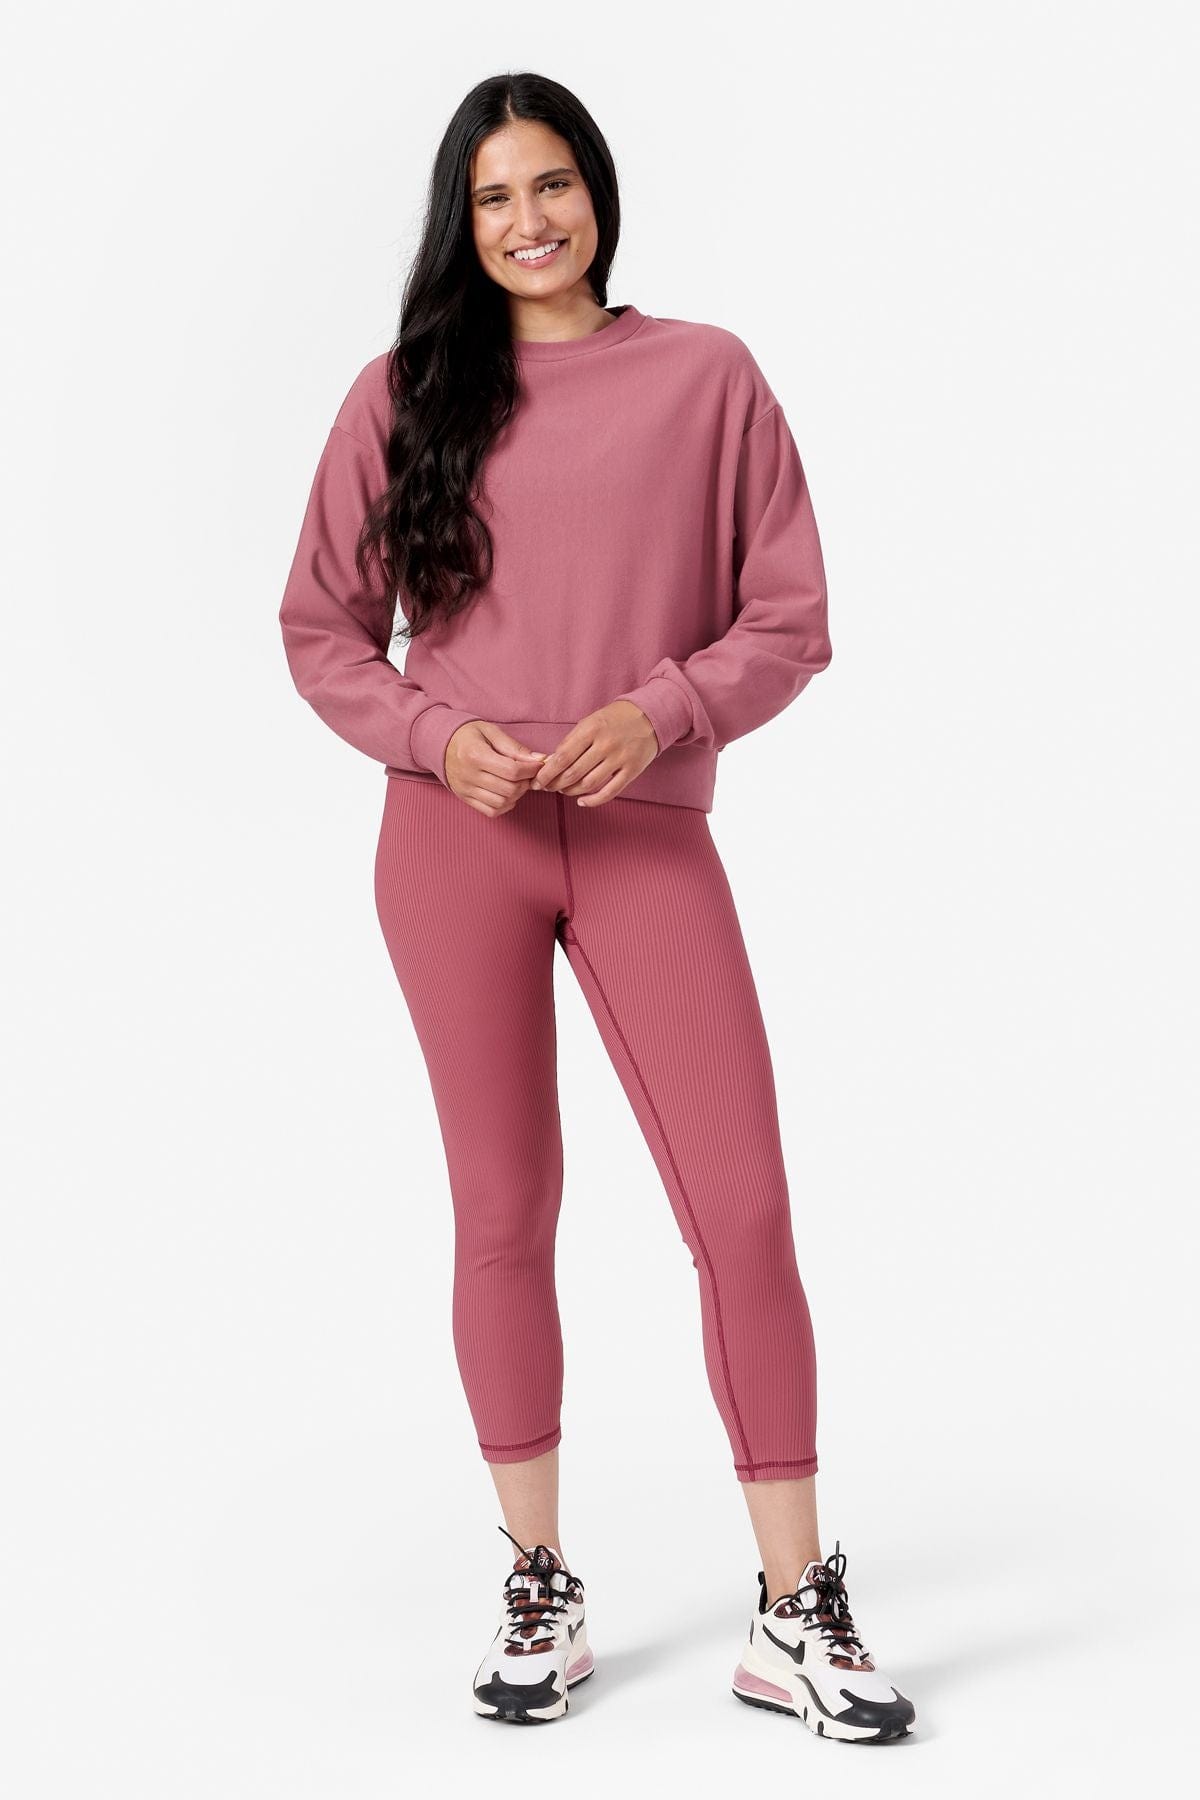 Woman wearing pink crew neck sweatshirt and pink leggings